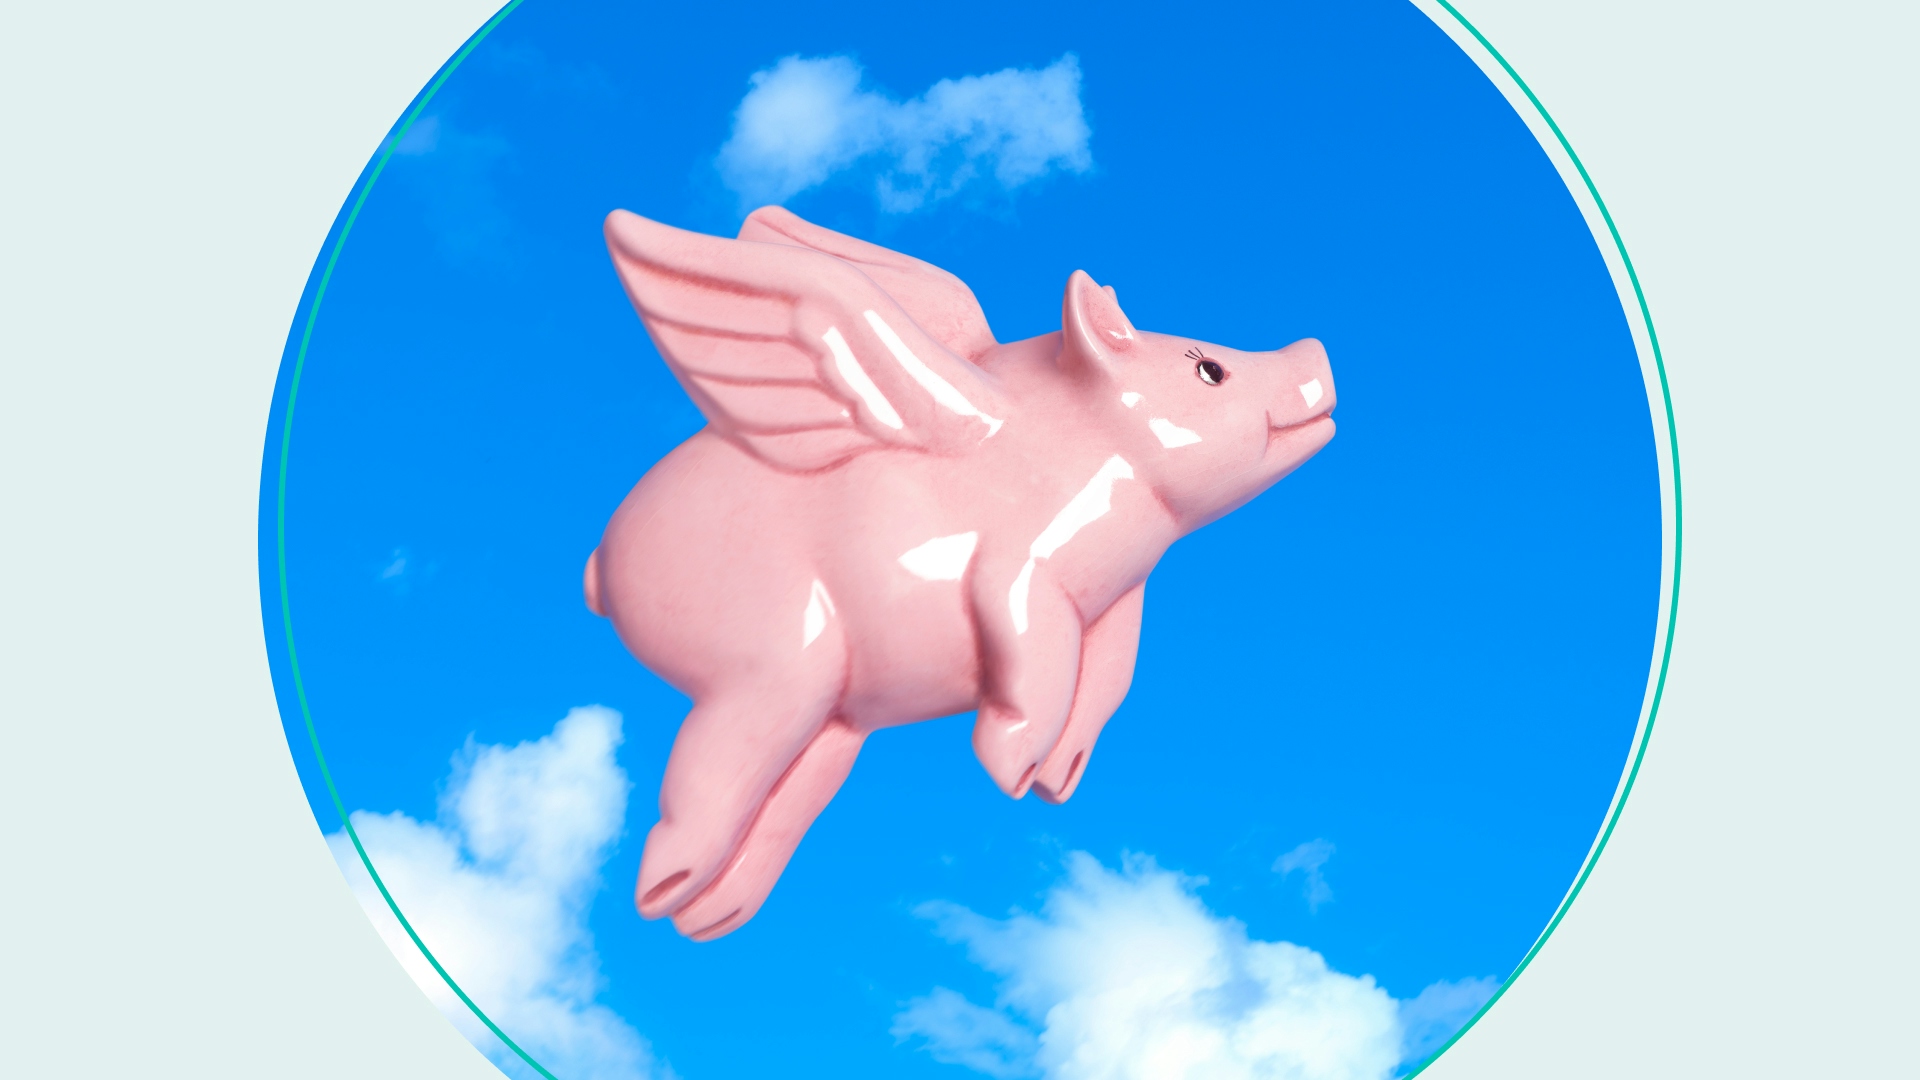 flying pig against blue sky, idiom expressing irony